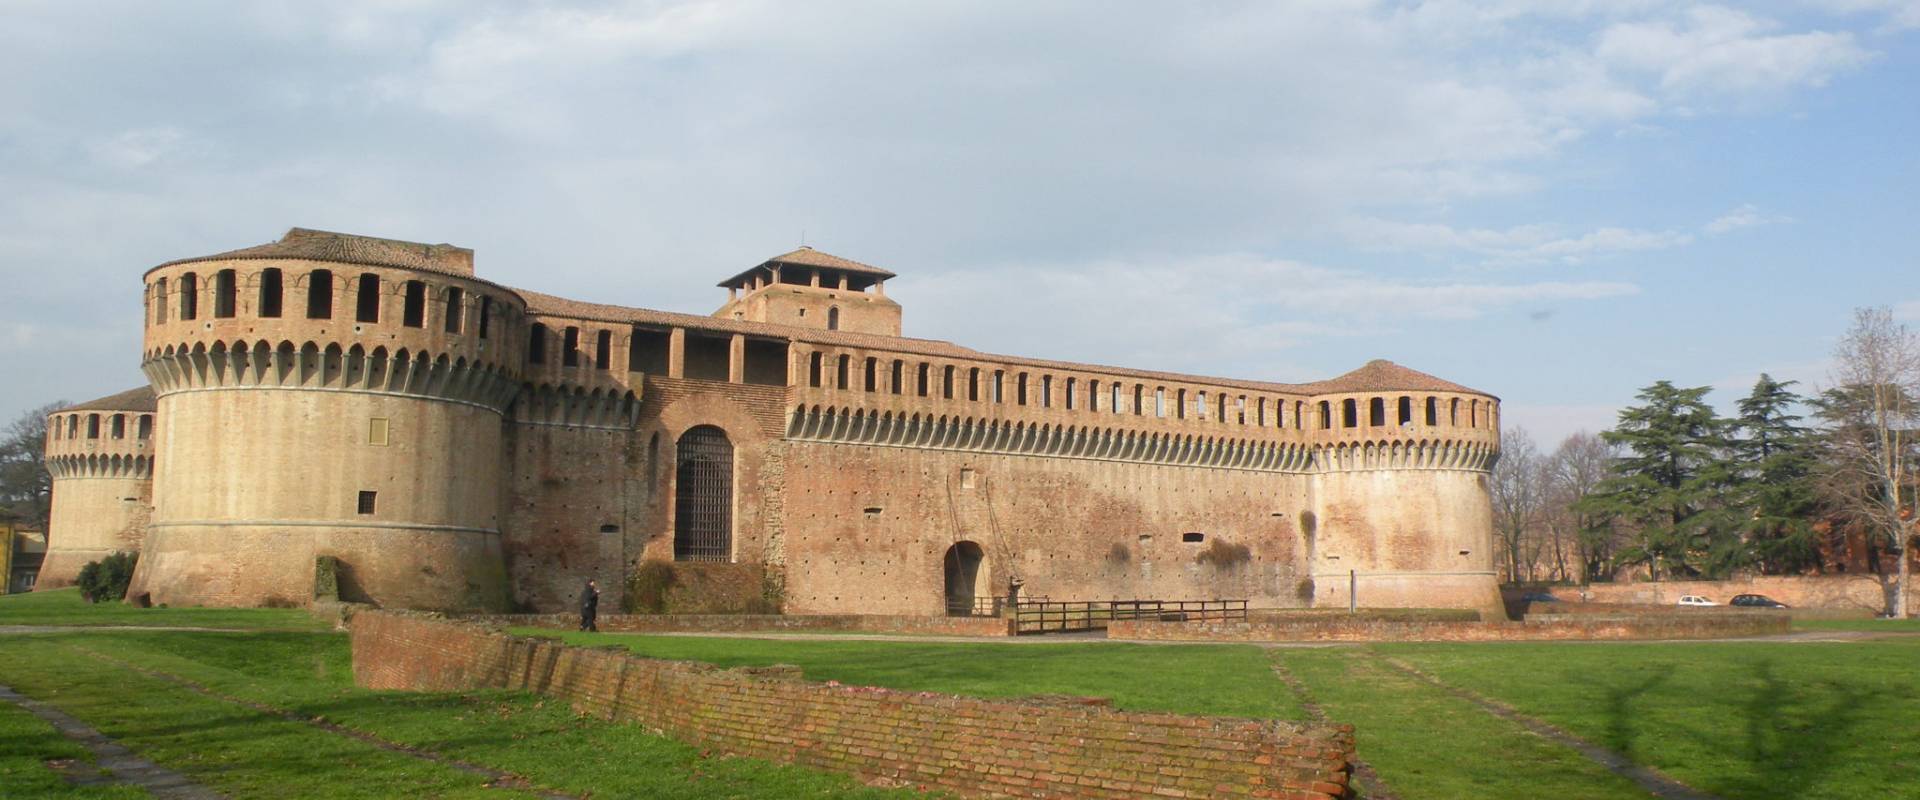 Castello d' Imola foto di Stefanophotart